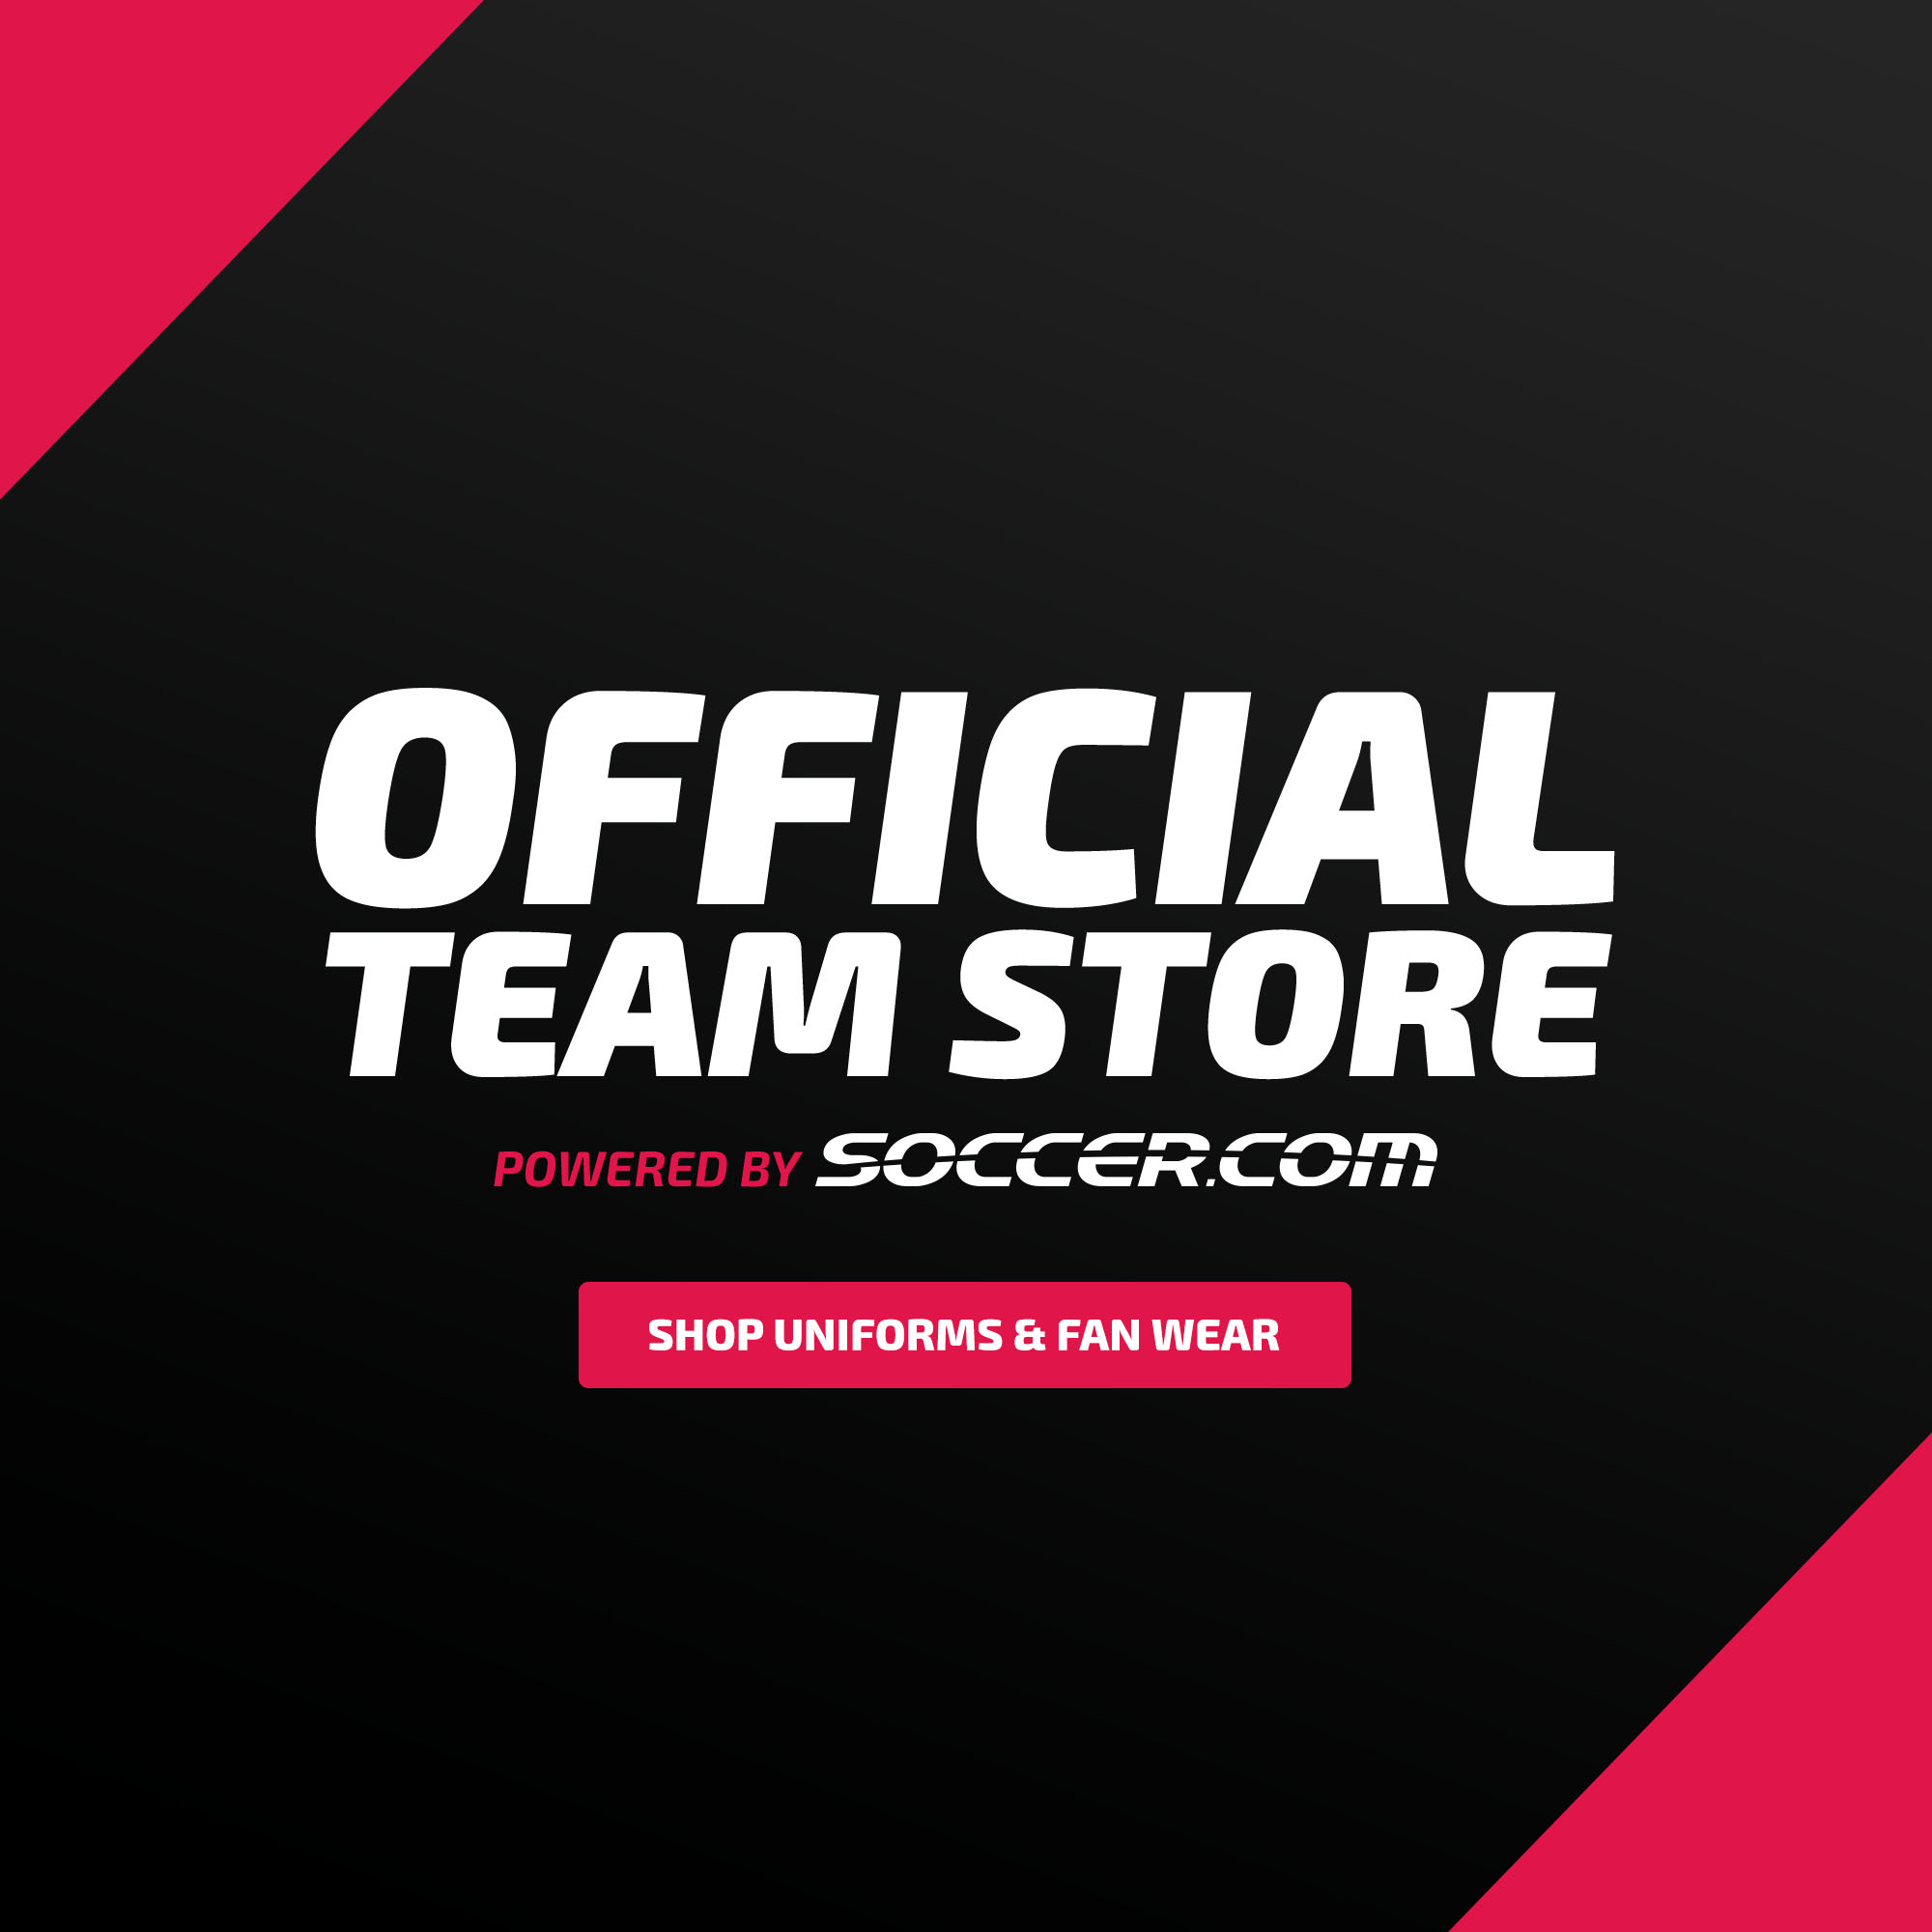 Website - Team Store